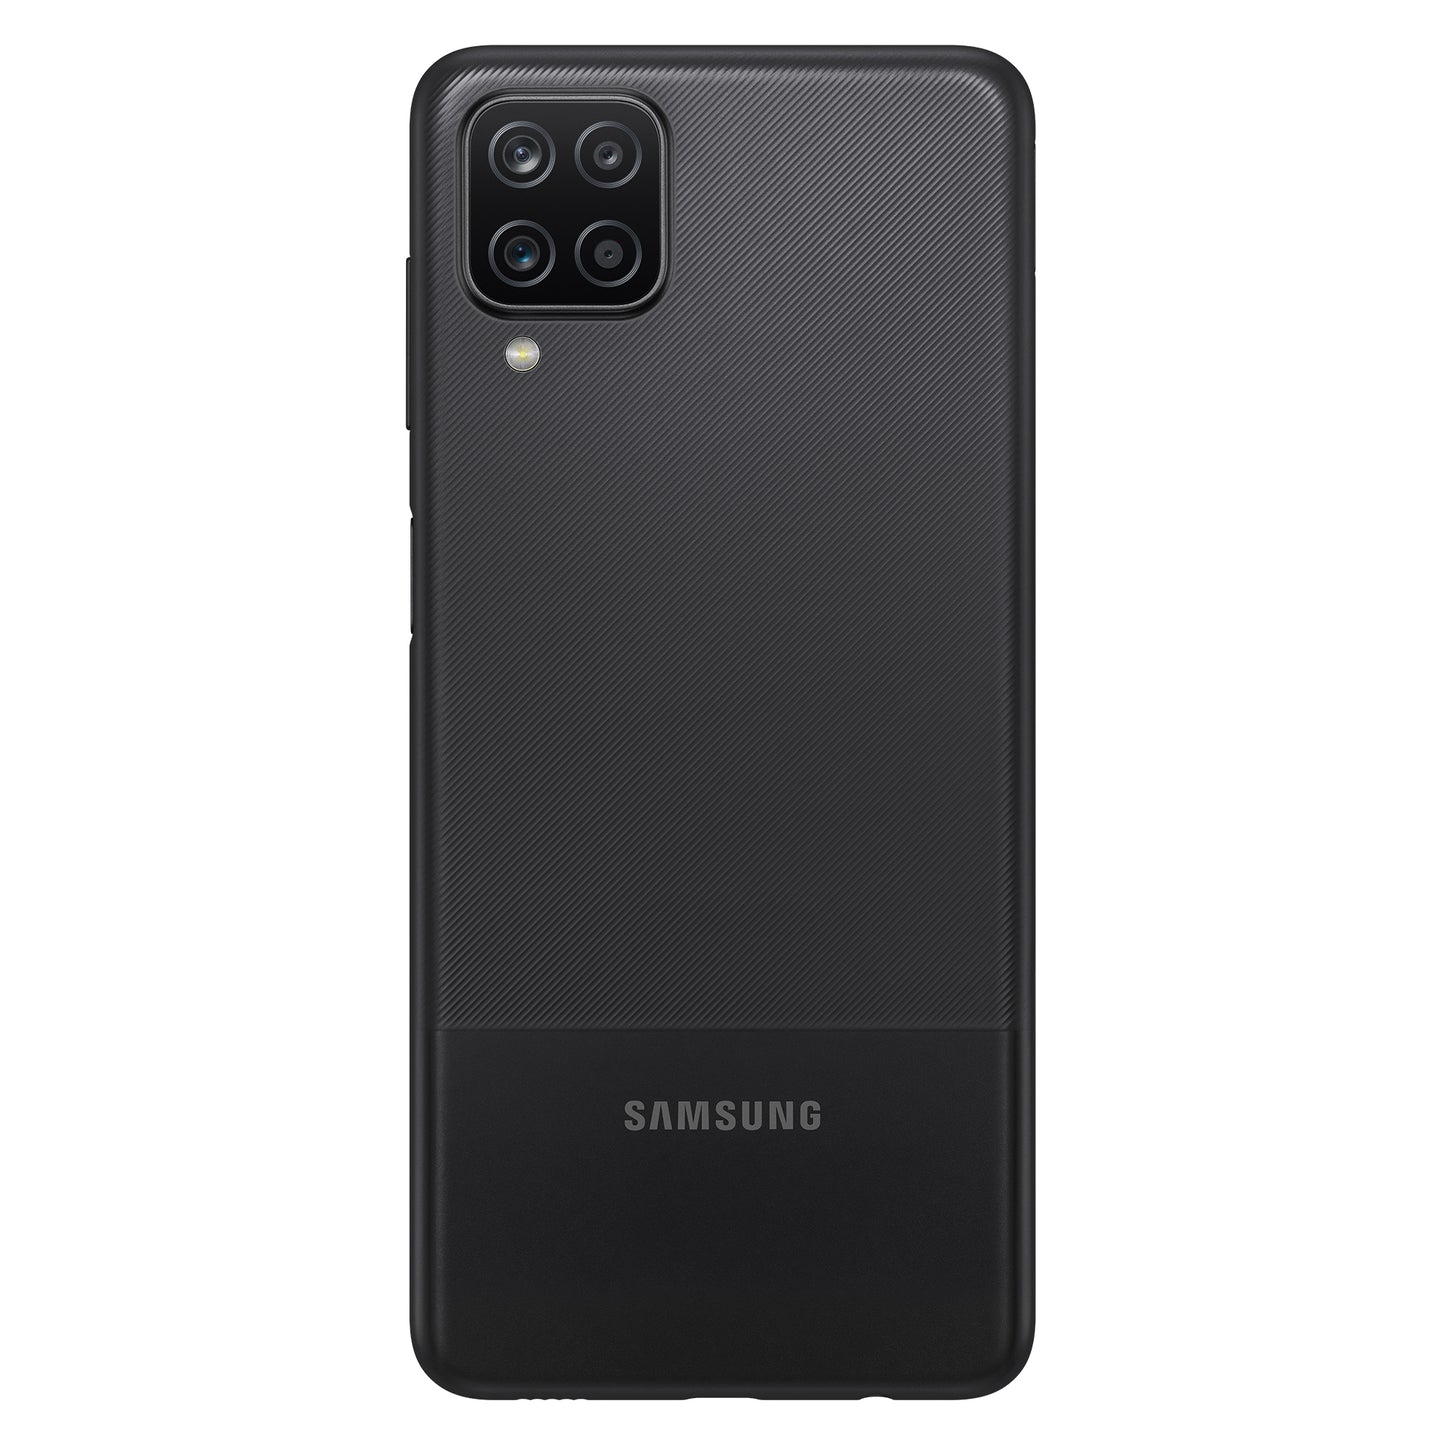 AT&T PREPAID 4G LTE Samsung Galaxy A12® Smartphone AT&T/CRICKET